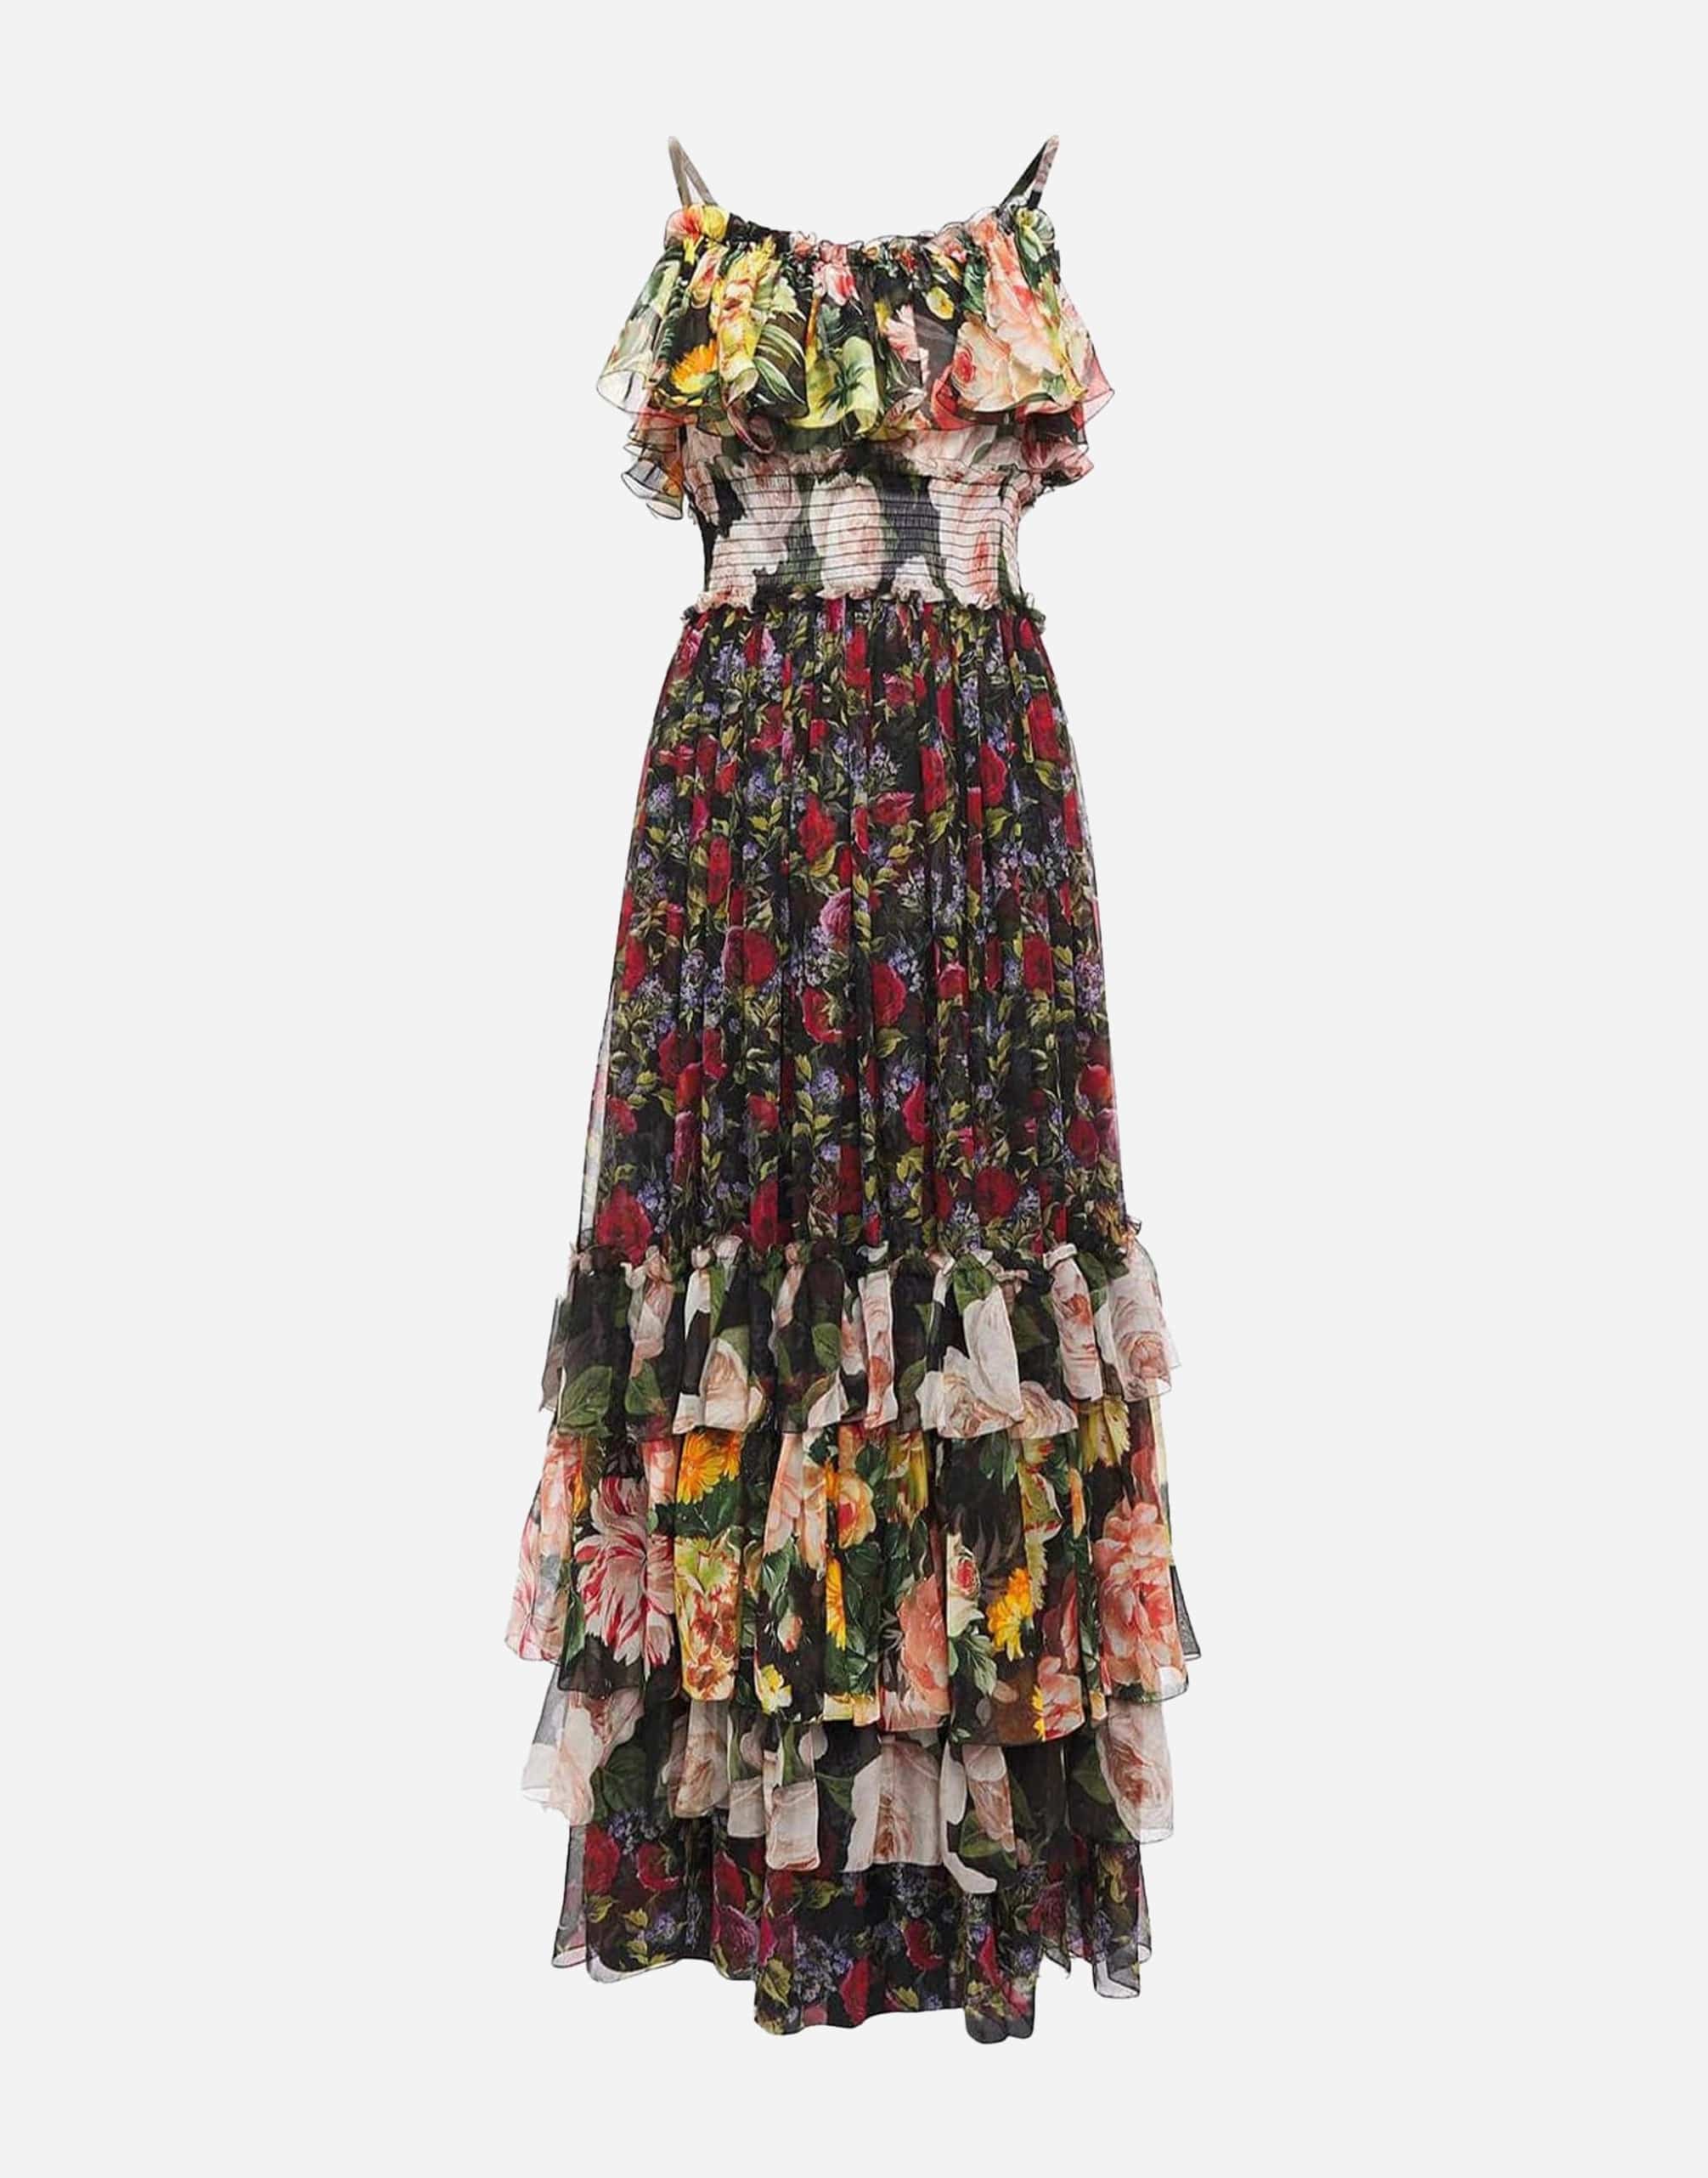 Dolce & Gabbana Floral Print Chiffon Layered Dress